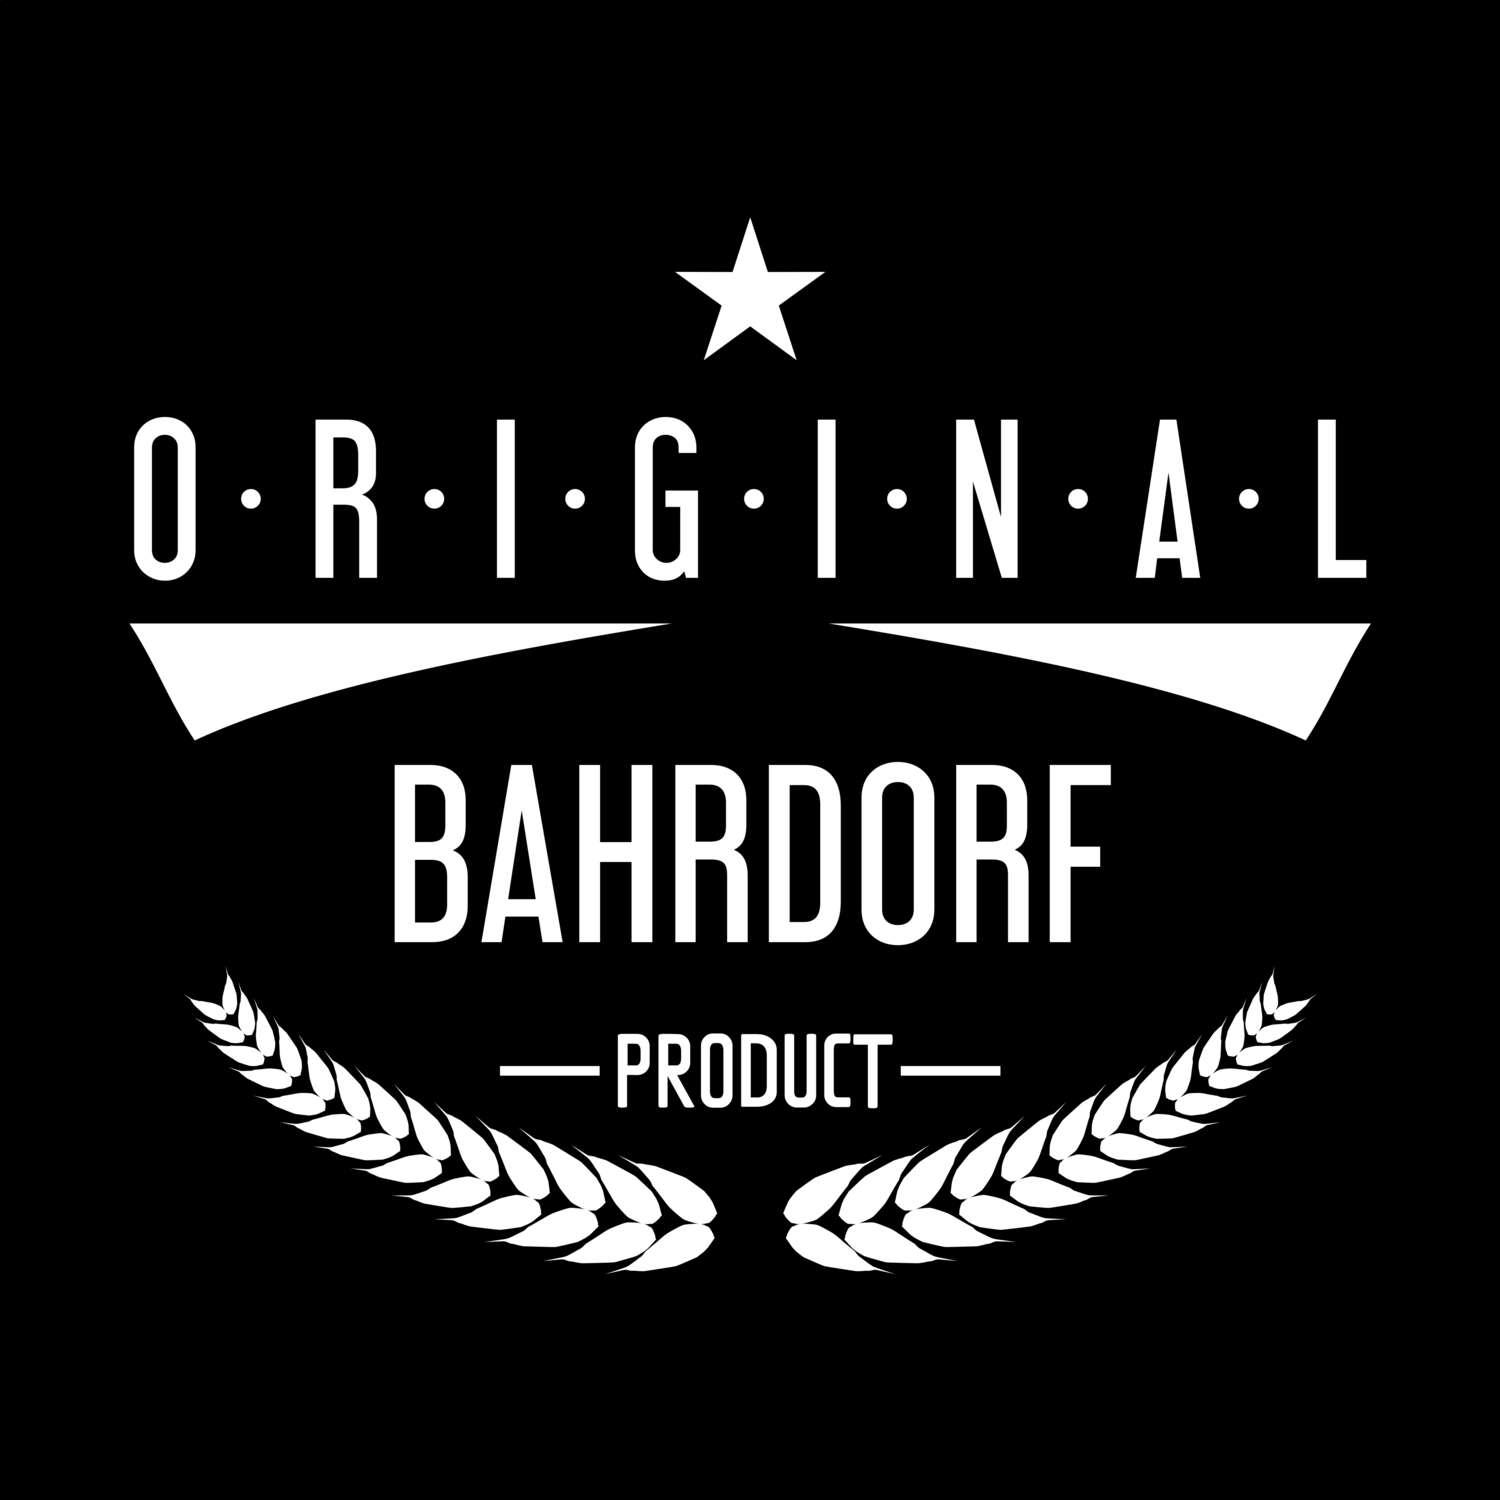 Bahrdorf T-Shirt »Original Product«